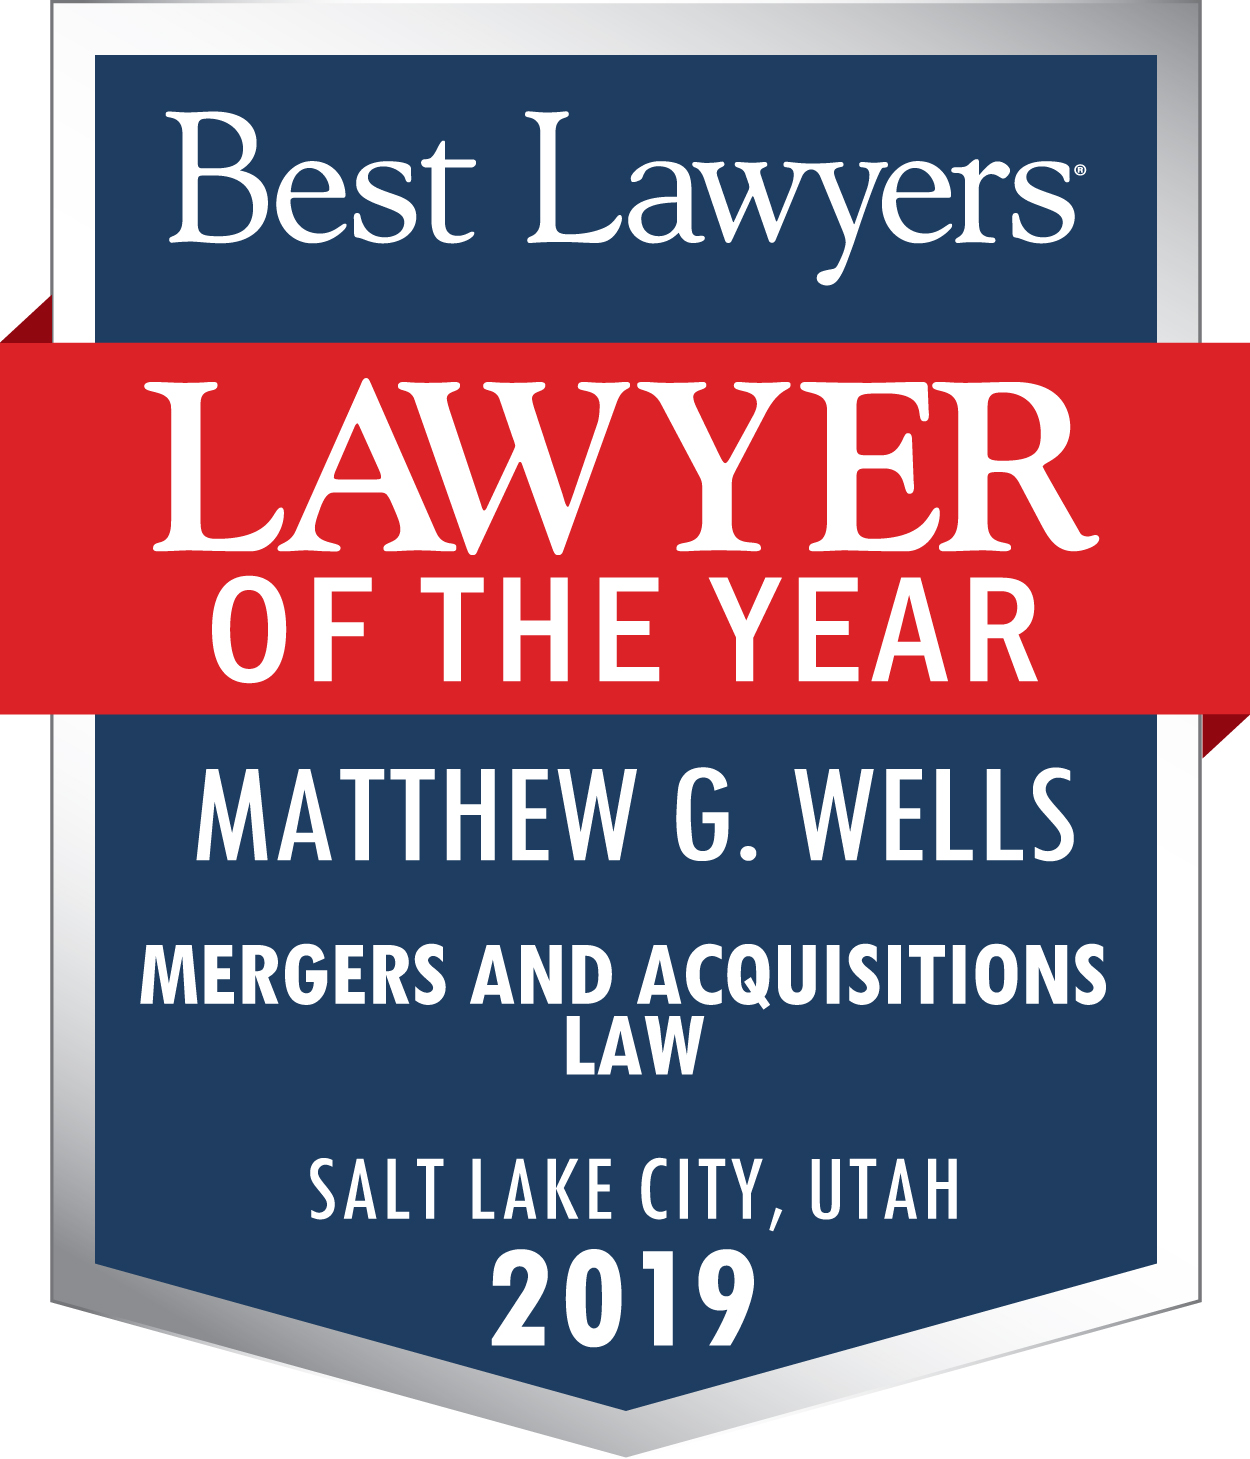 Best Lawyers Lawyer of the Year Matt Wells 2019